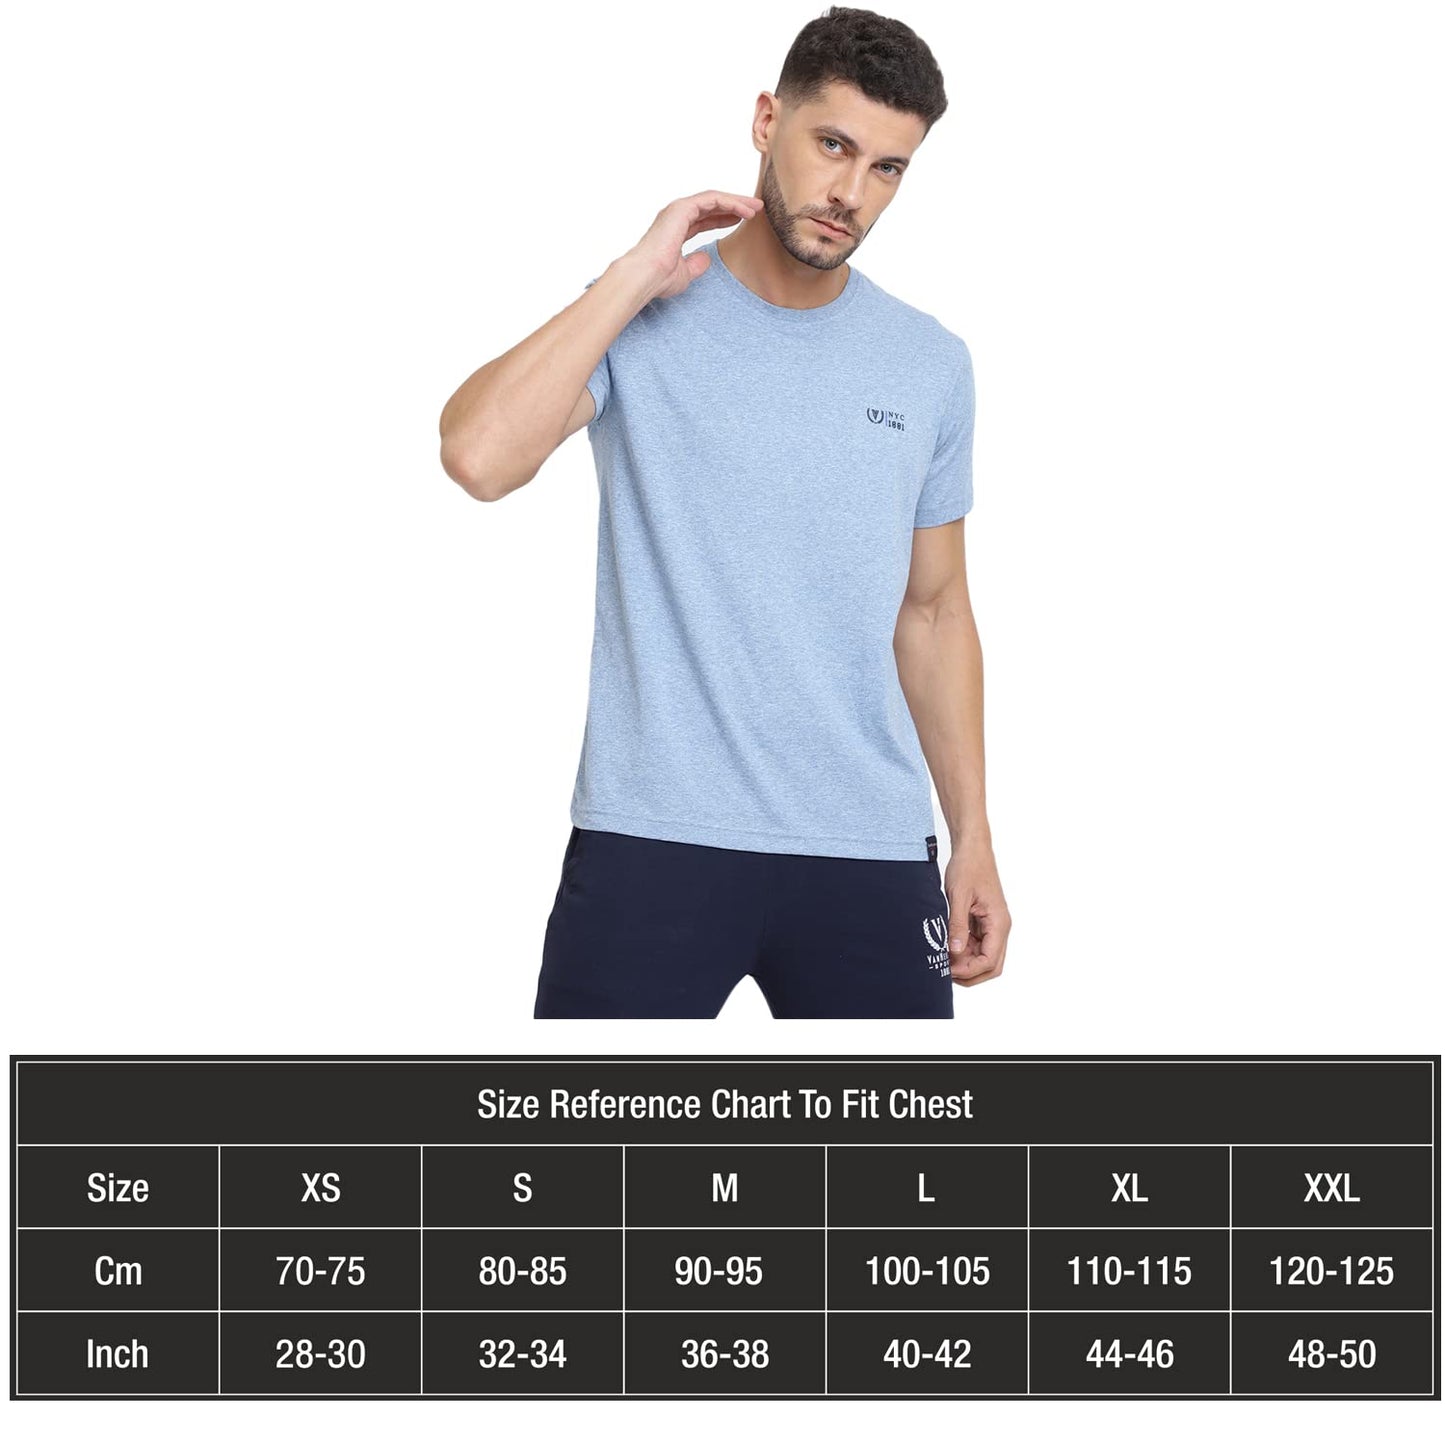 Van Heusen Men Sport Crew Neck Regular Fit T-Shirt - Short Sleeve, Ultra Soft_70018_Sky Blue_Large